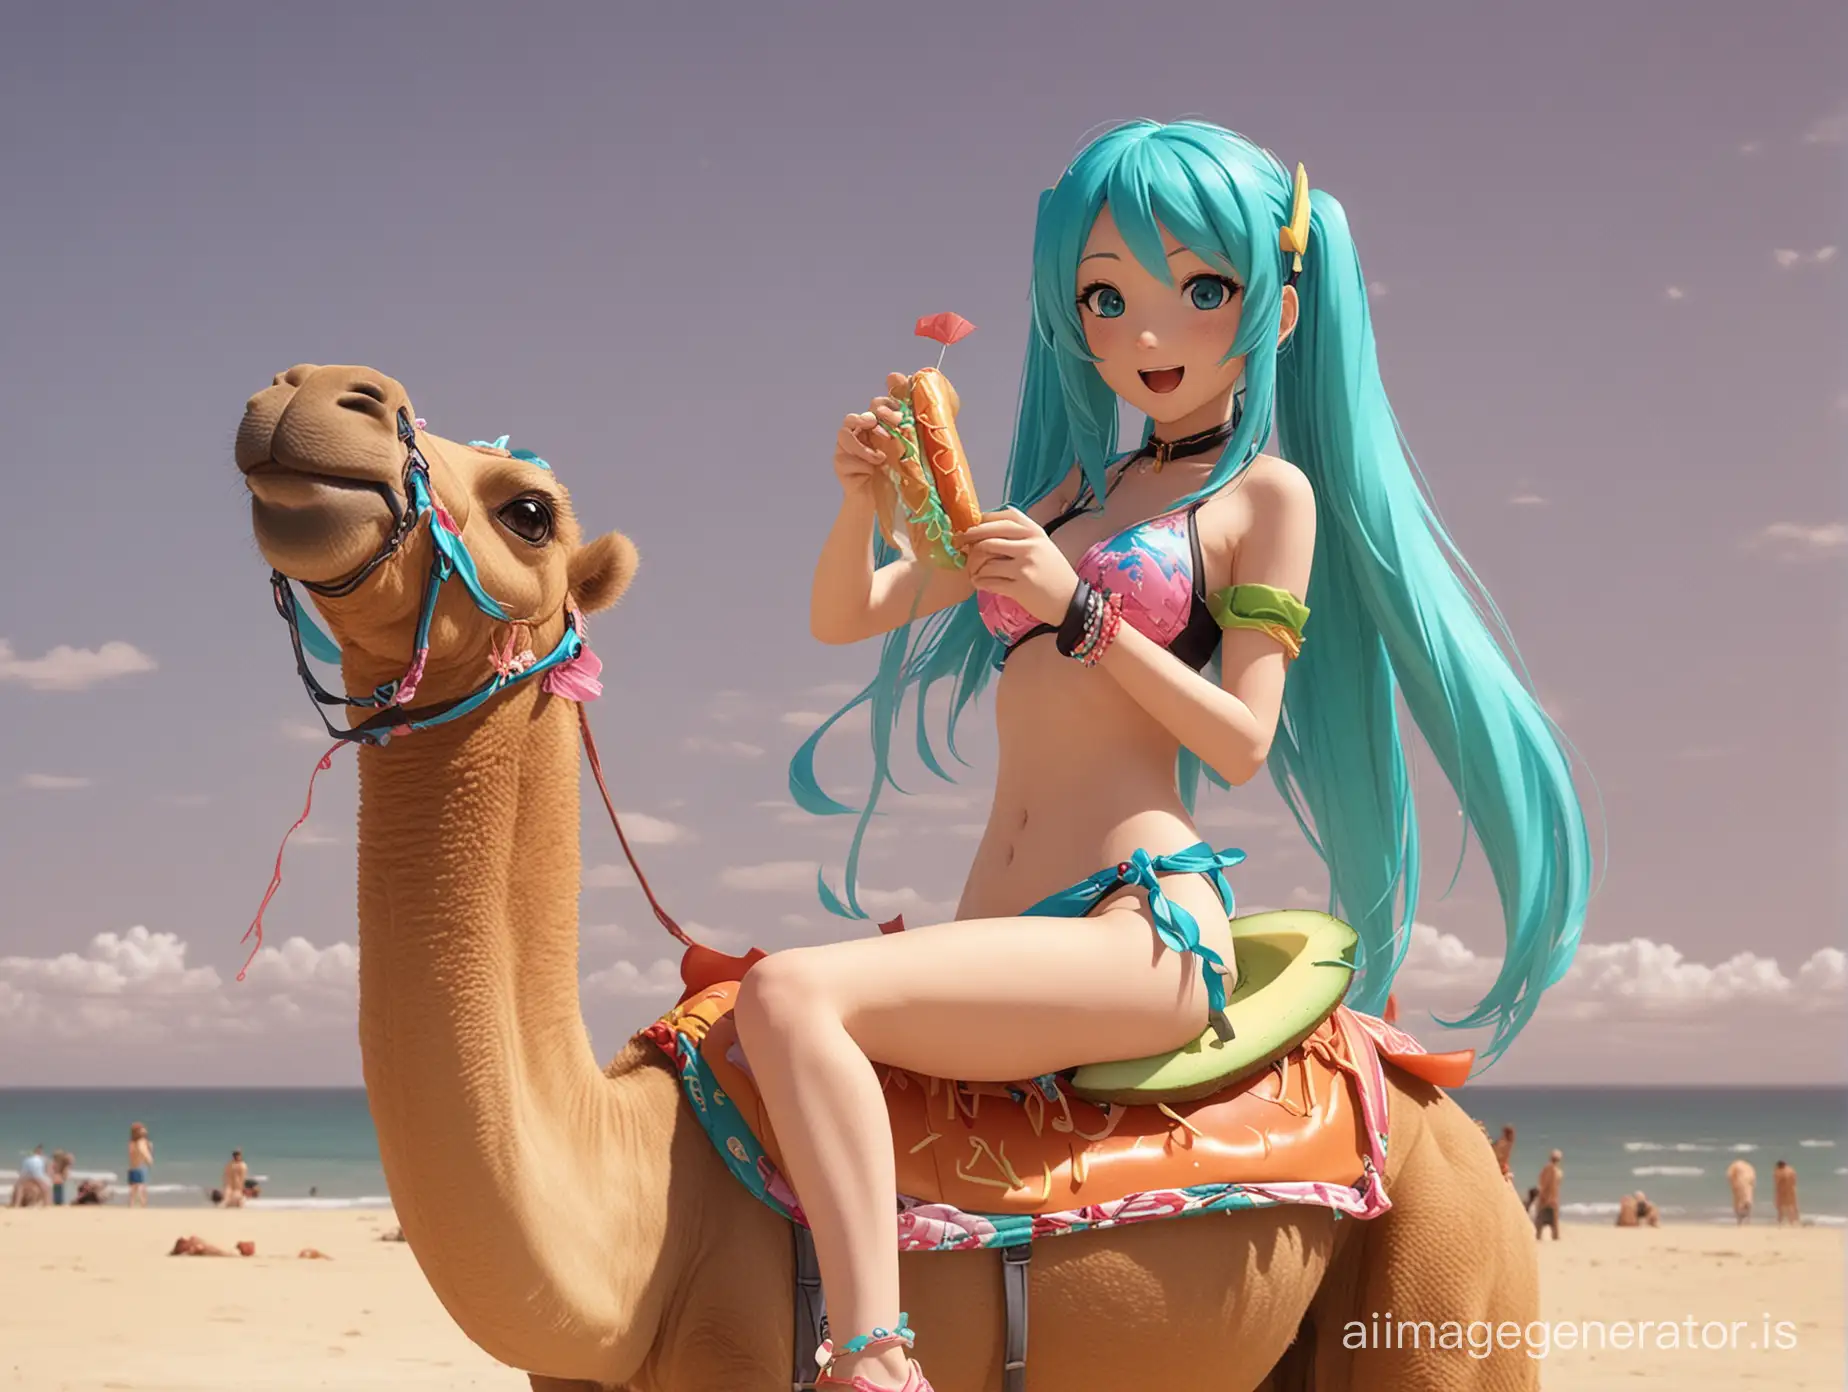 Hatsune miku eating a hot dog with avocado while riding a camel in a bikini